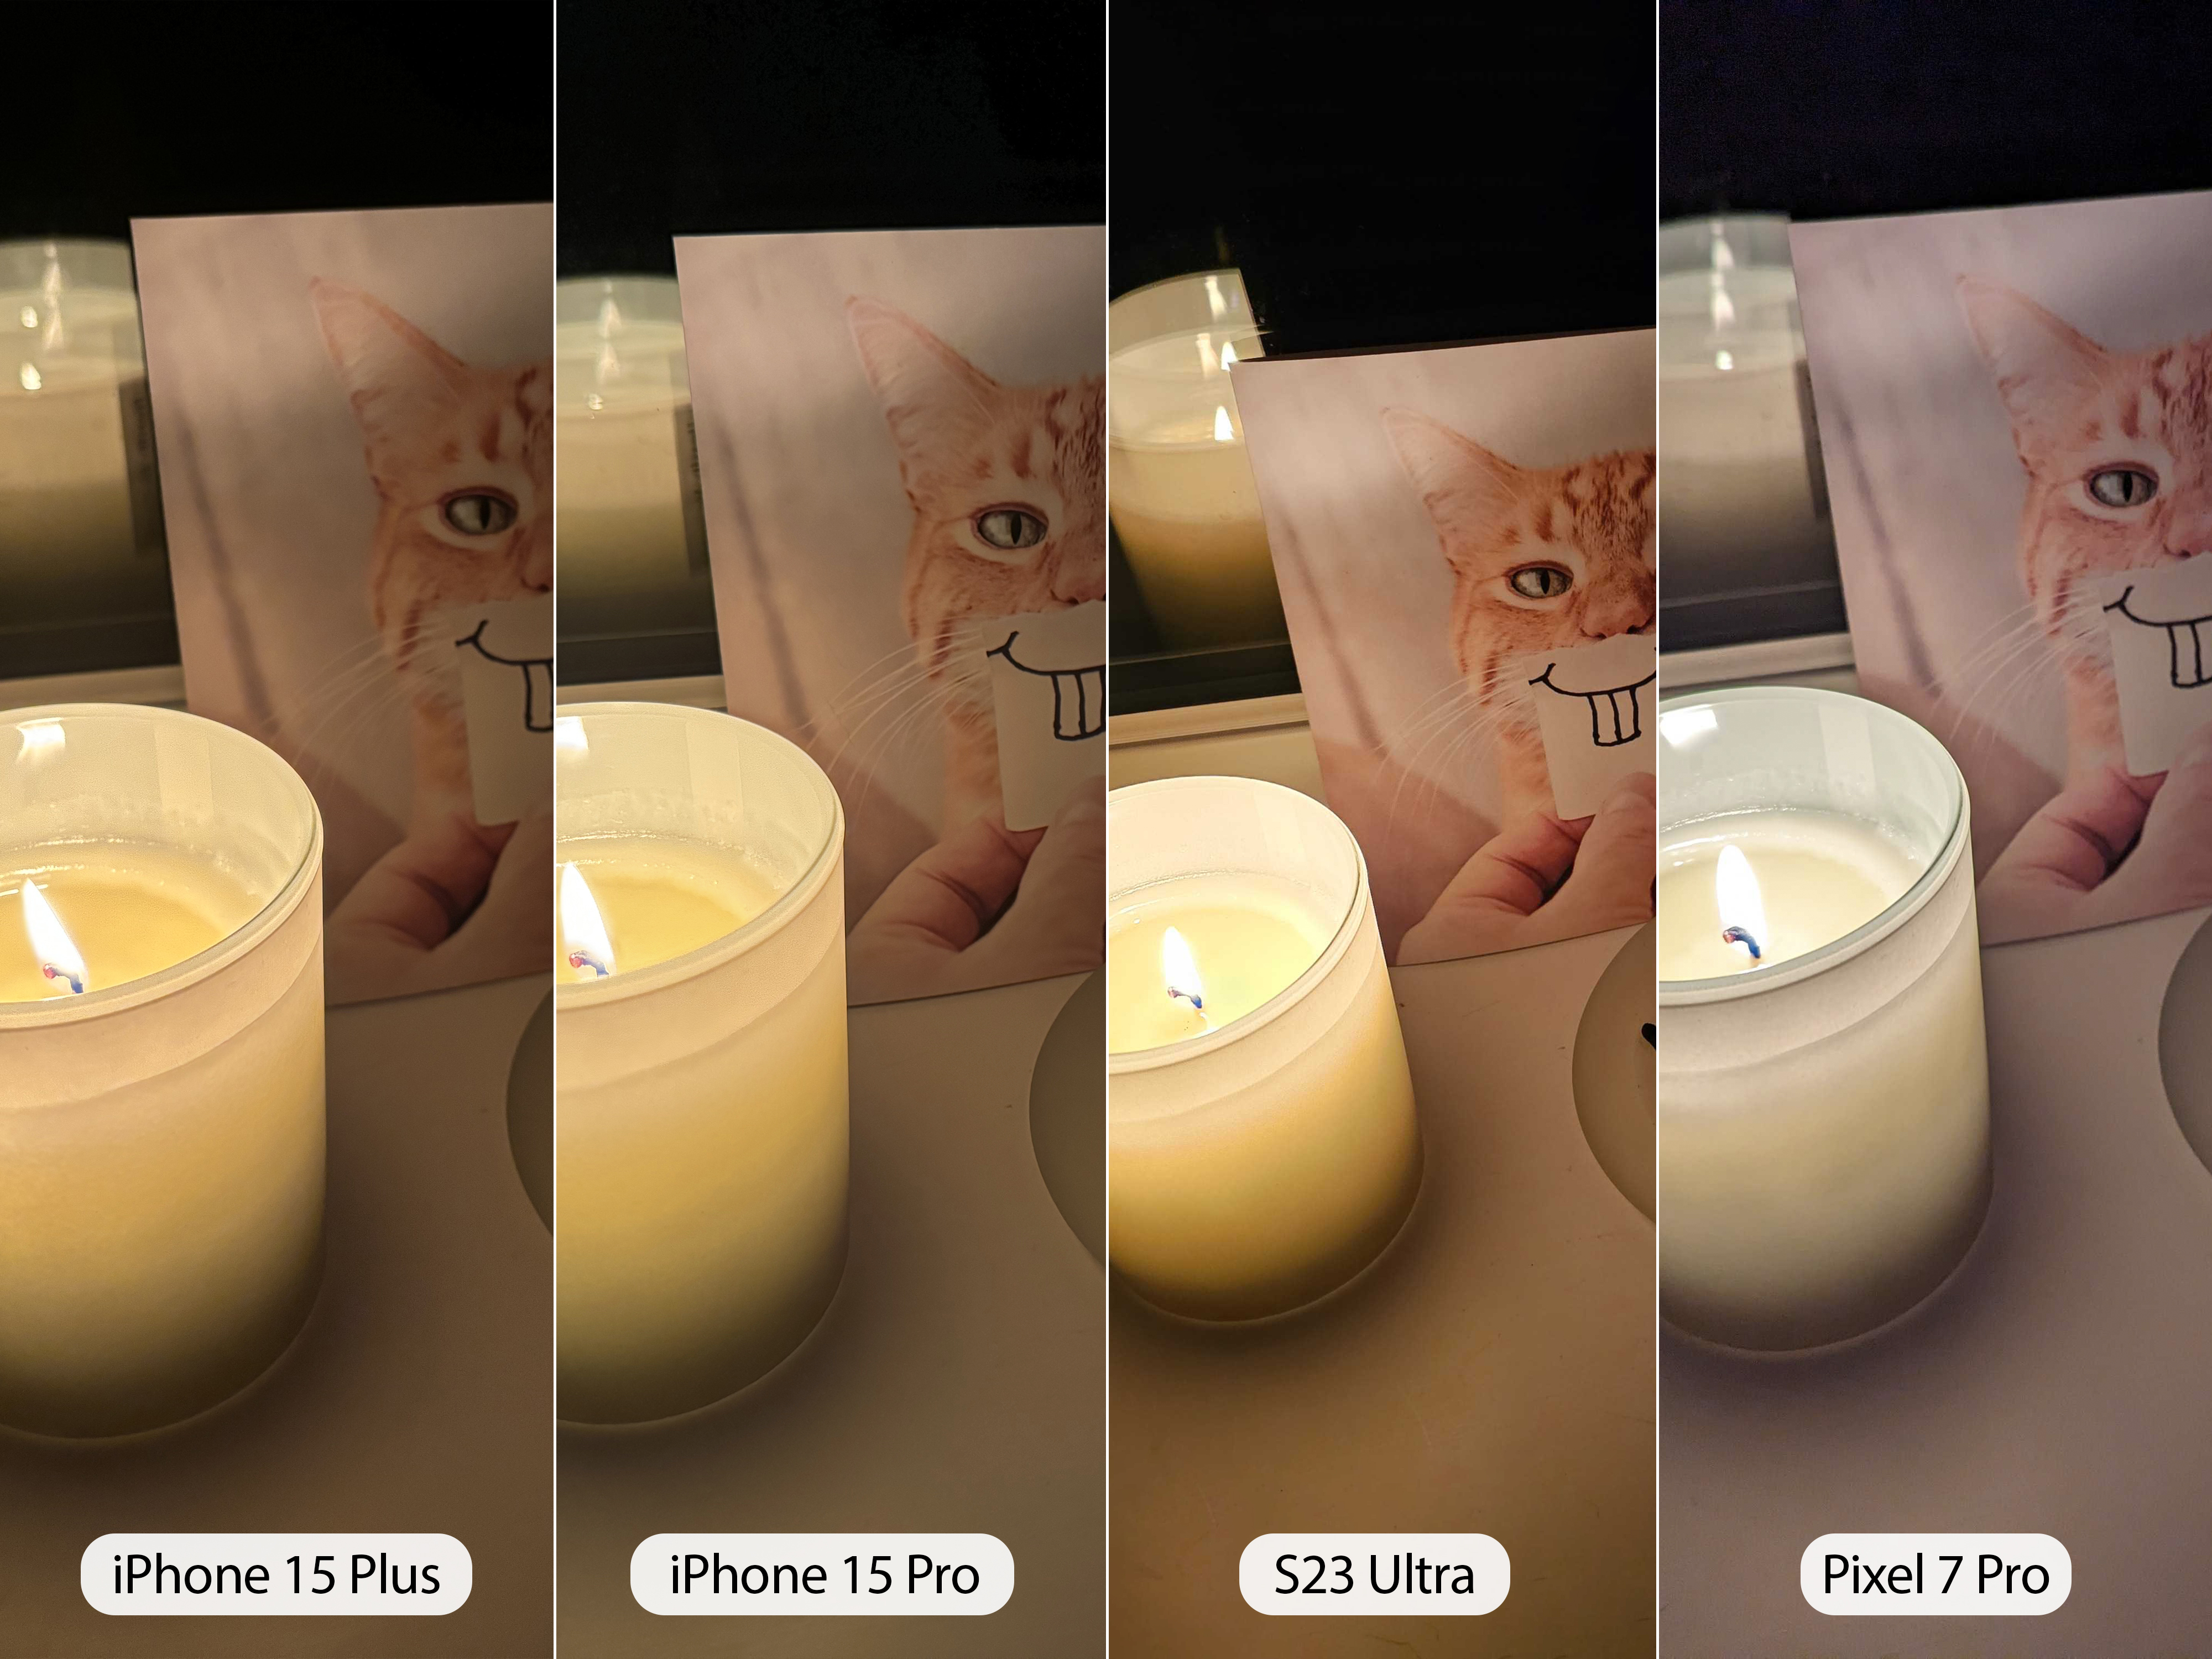 iPhone 15 Pro camera sample candle full comparison